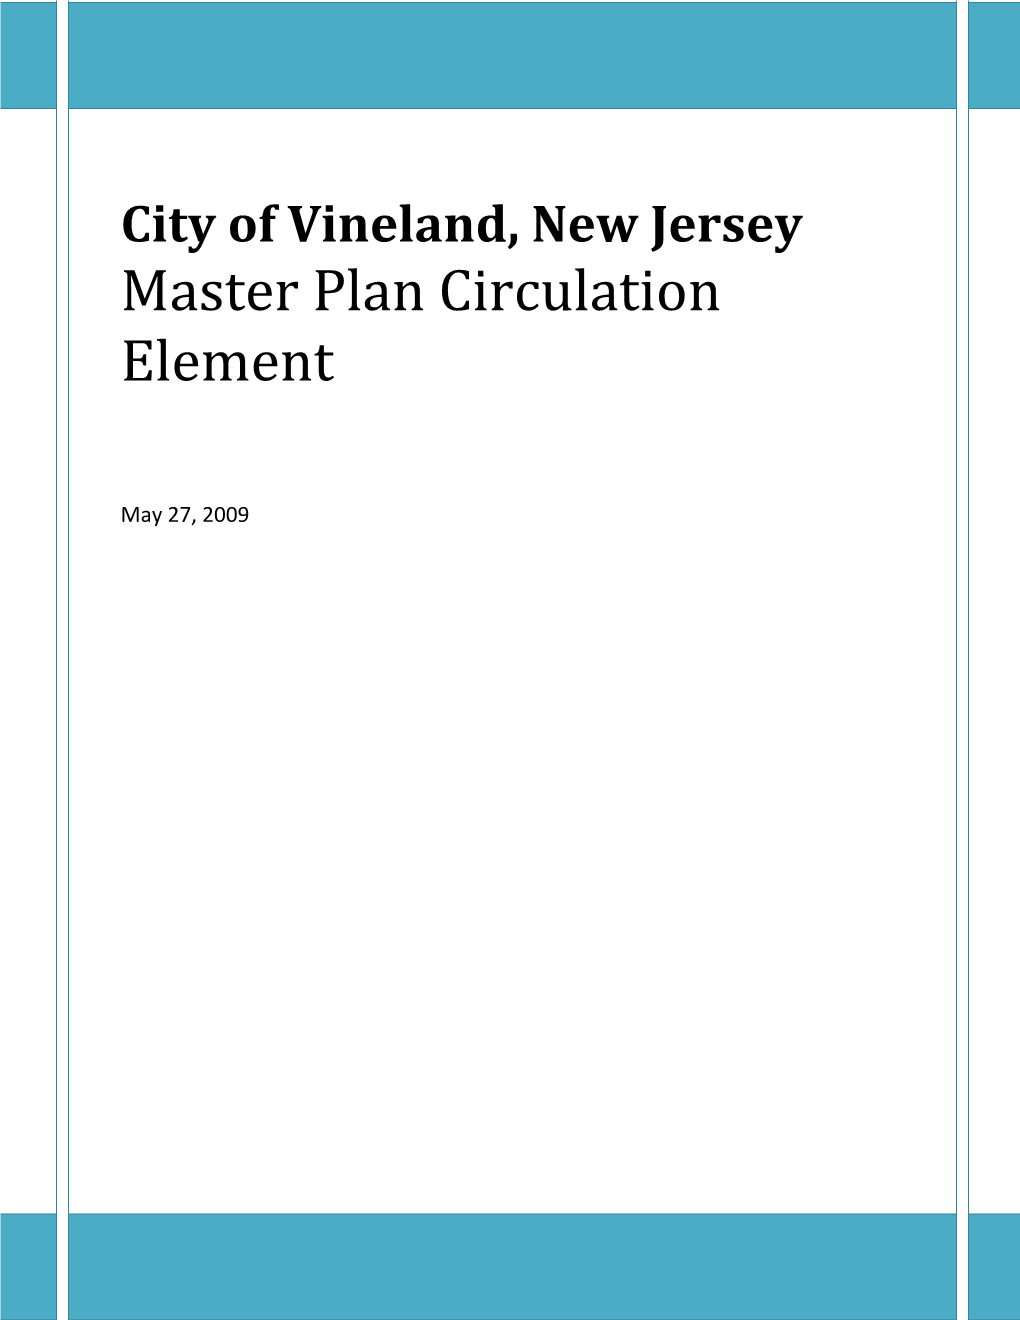 City of Vineland, New Jersey DRAFT Master Plan Circulation Element